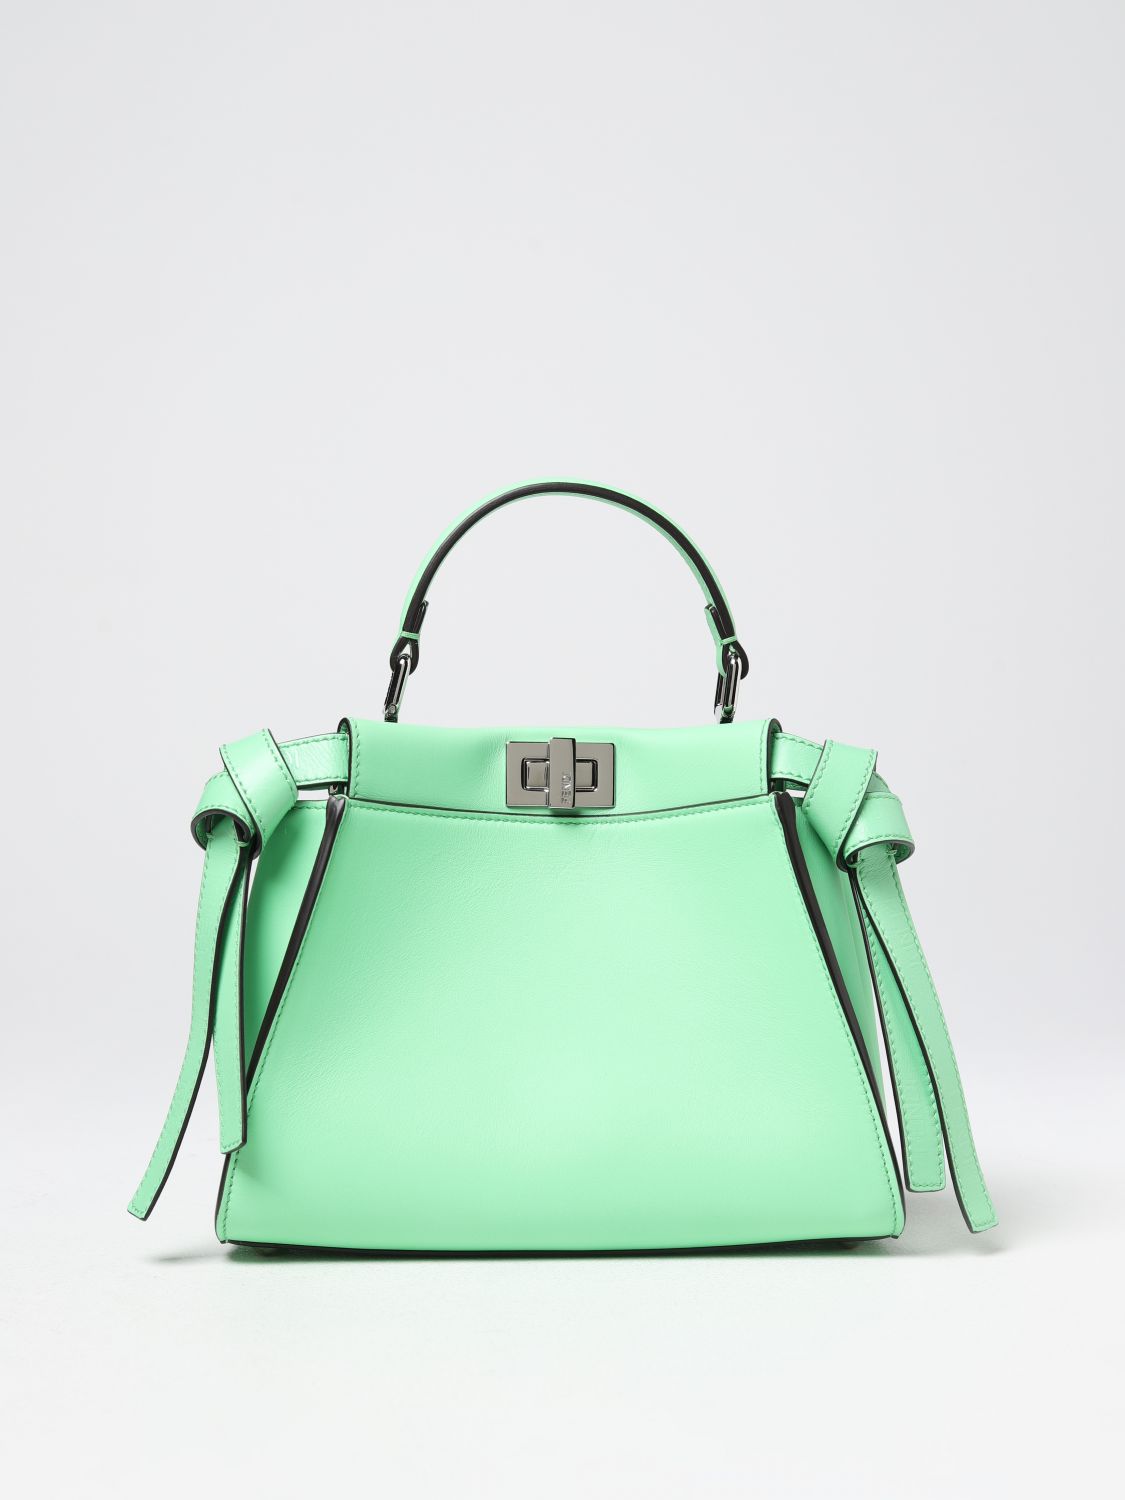 FENDI: Peekaboo Mini bag in leather - Green | Fendi handbag 8BN244ANSD ...